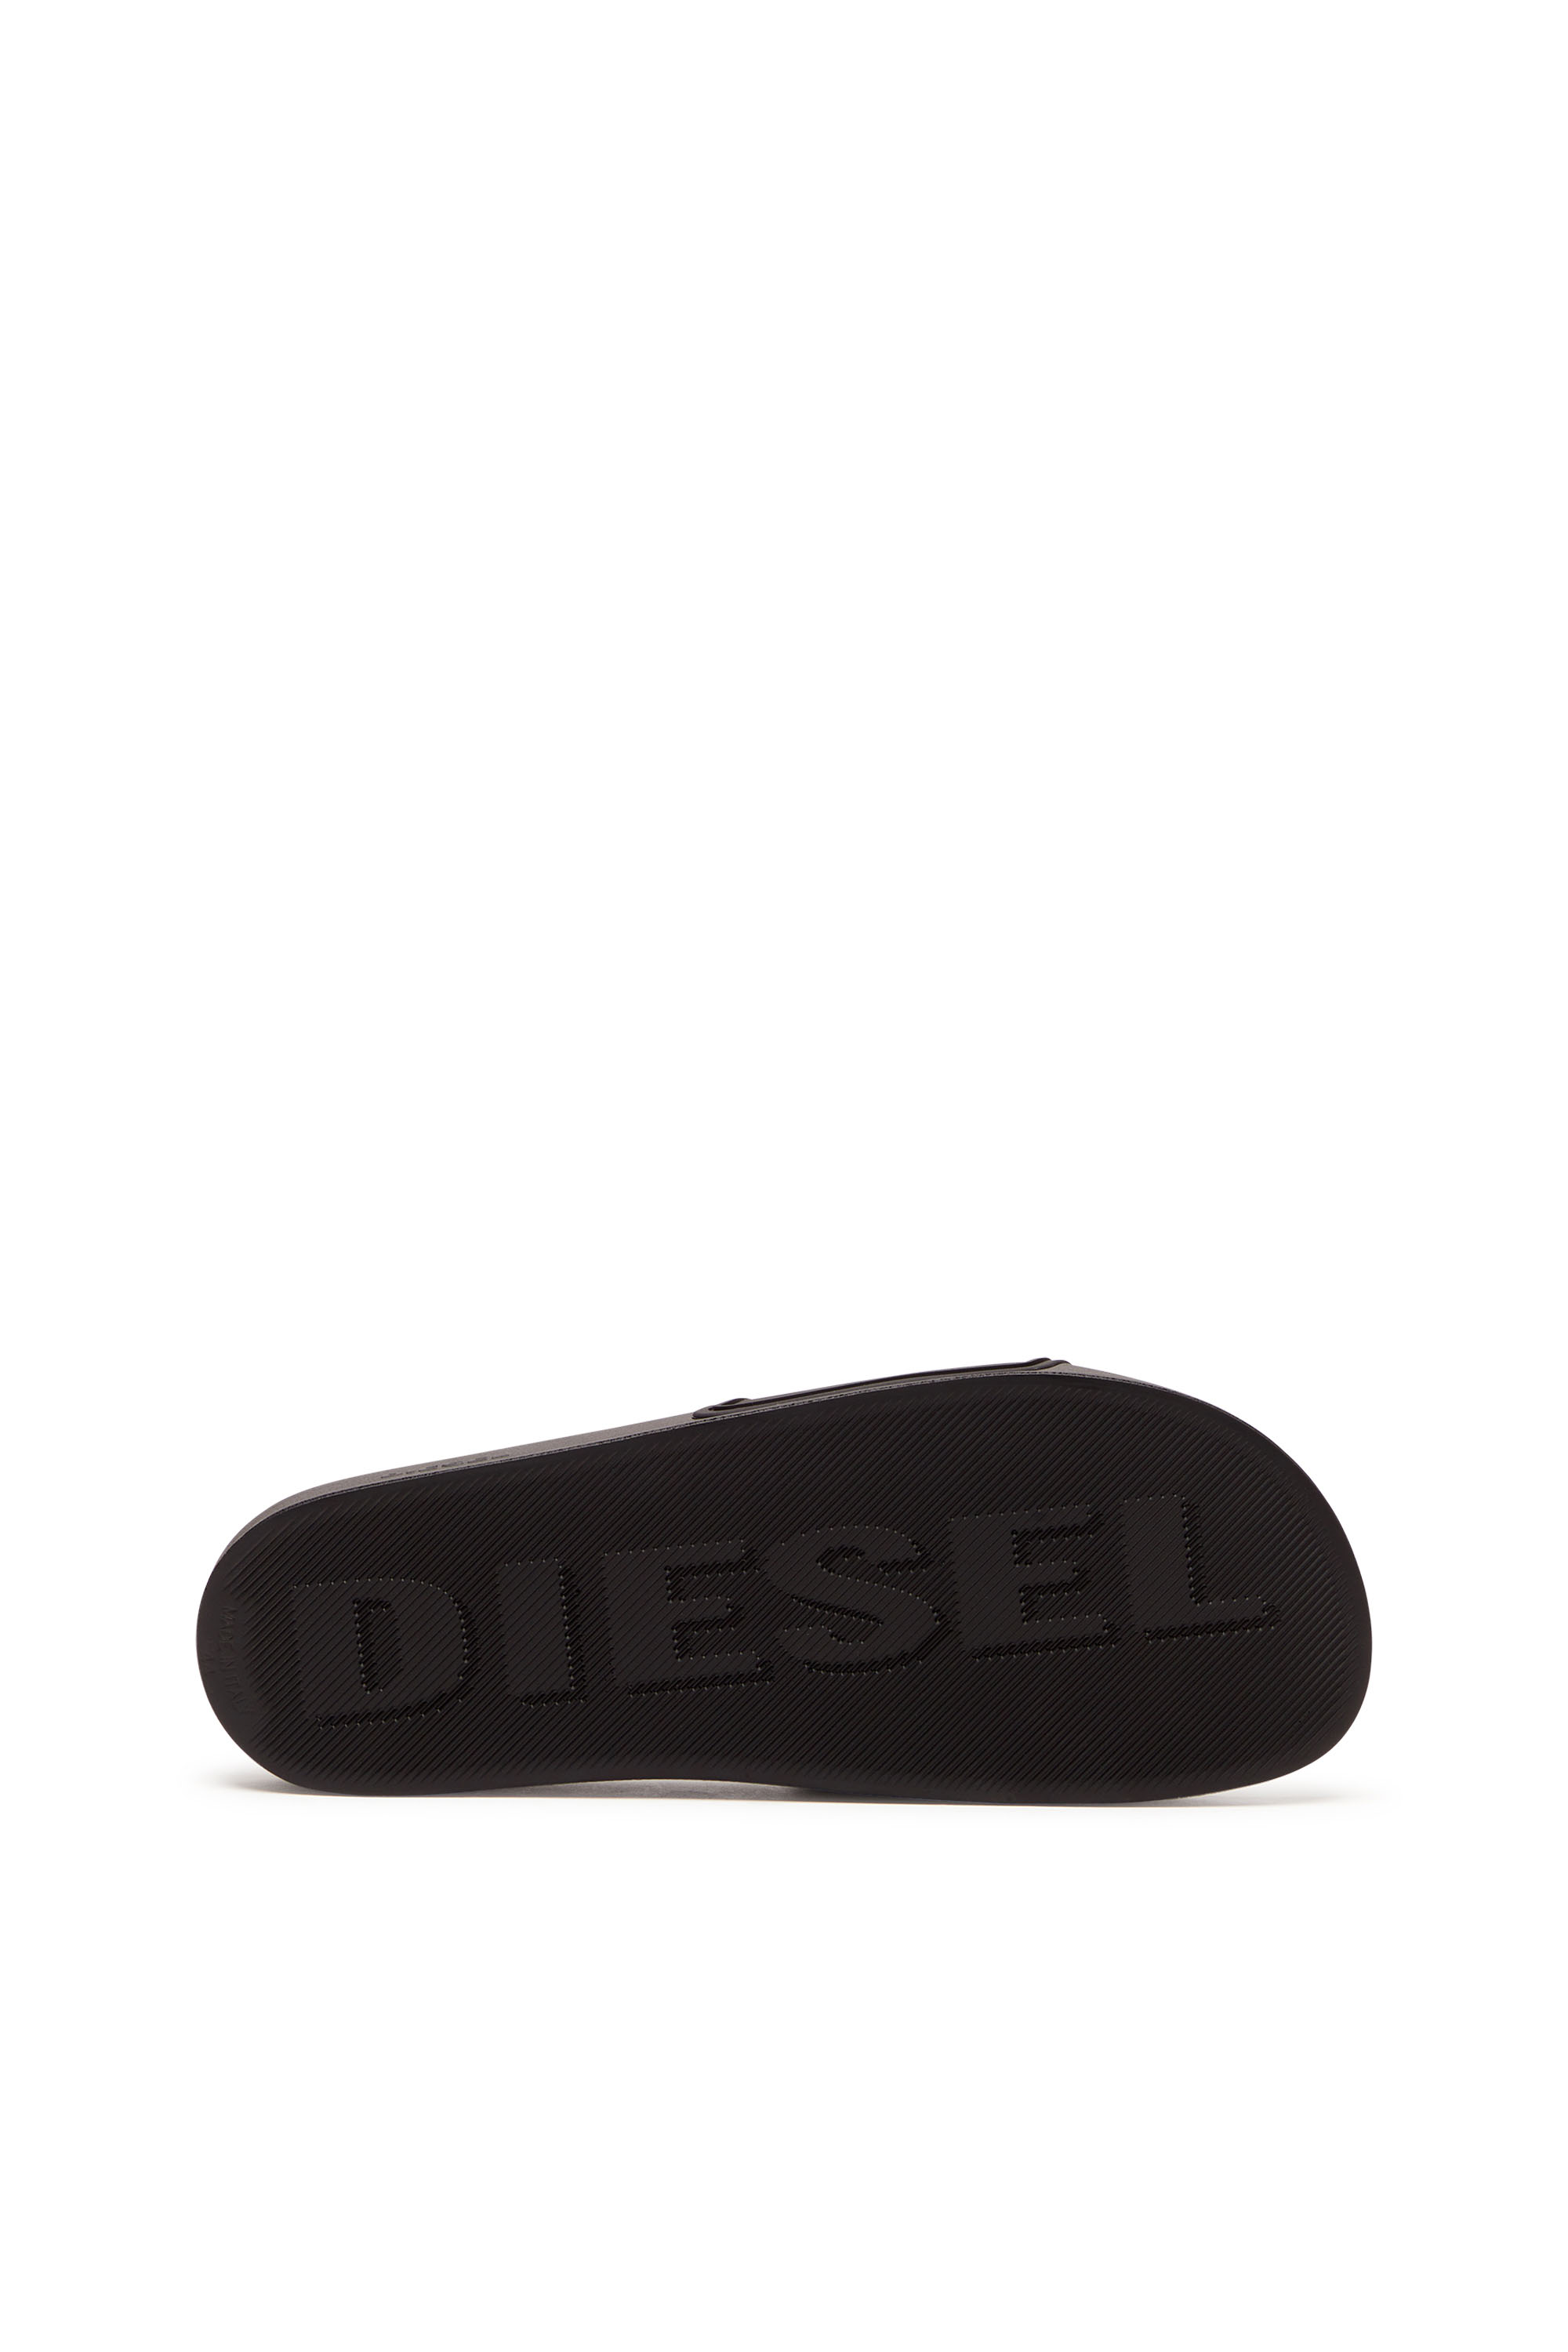 Diesel - SA-MAYEMI CC, Black - Image 4